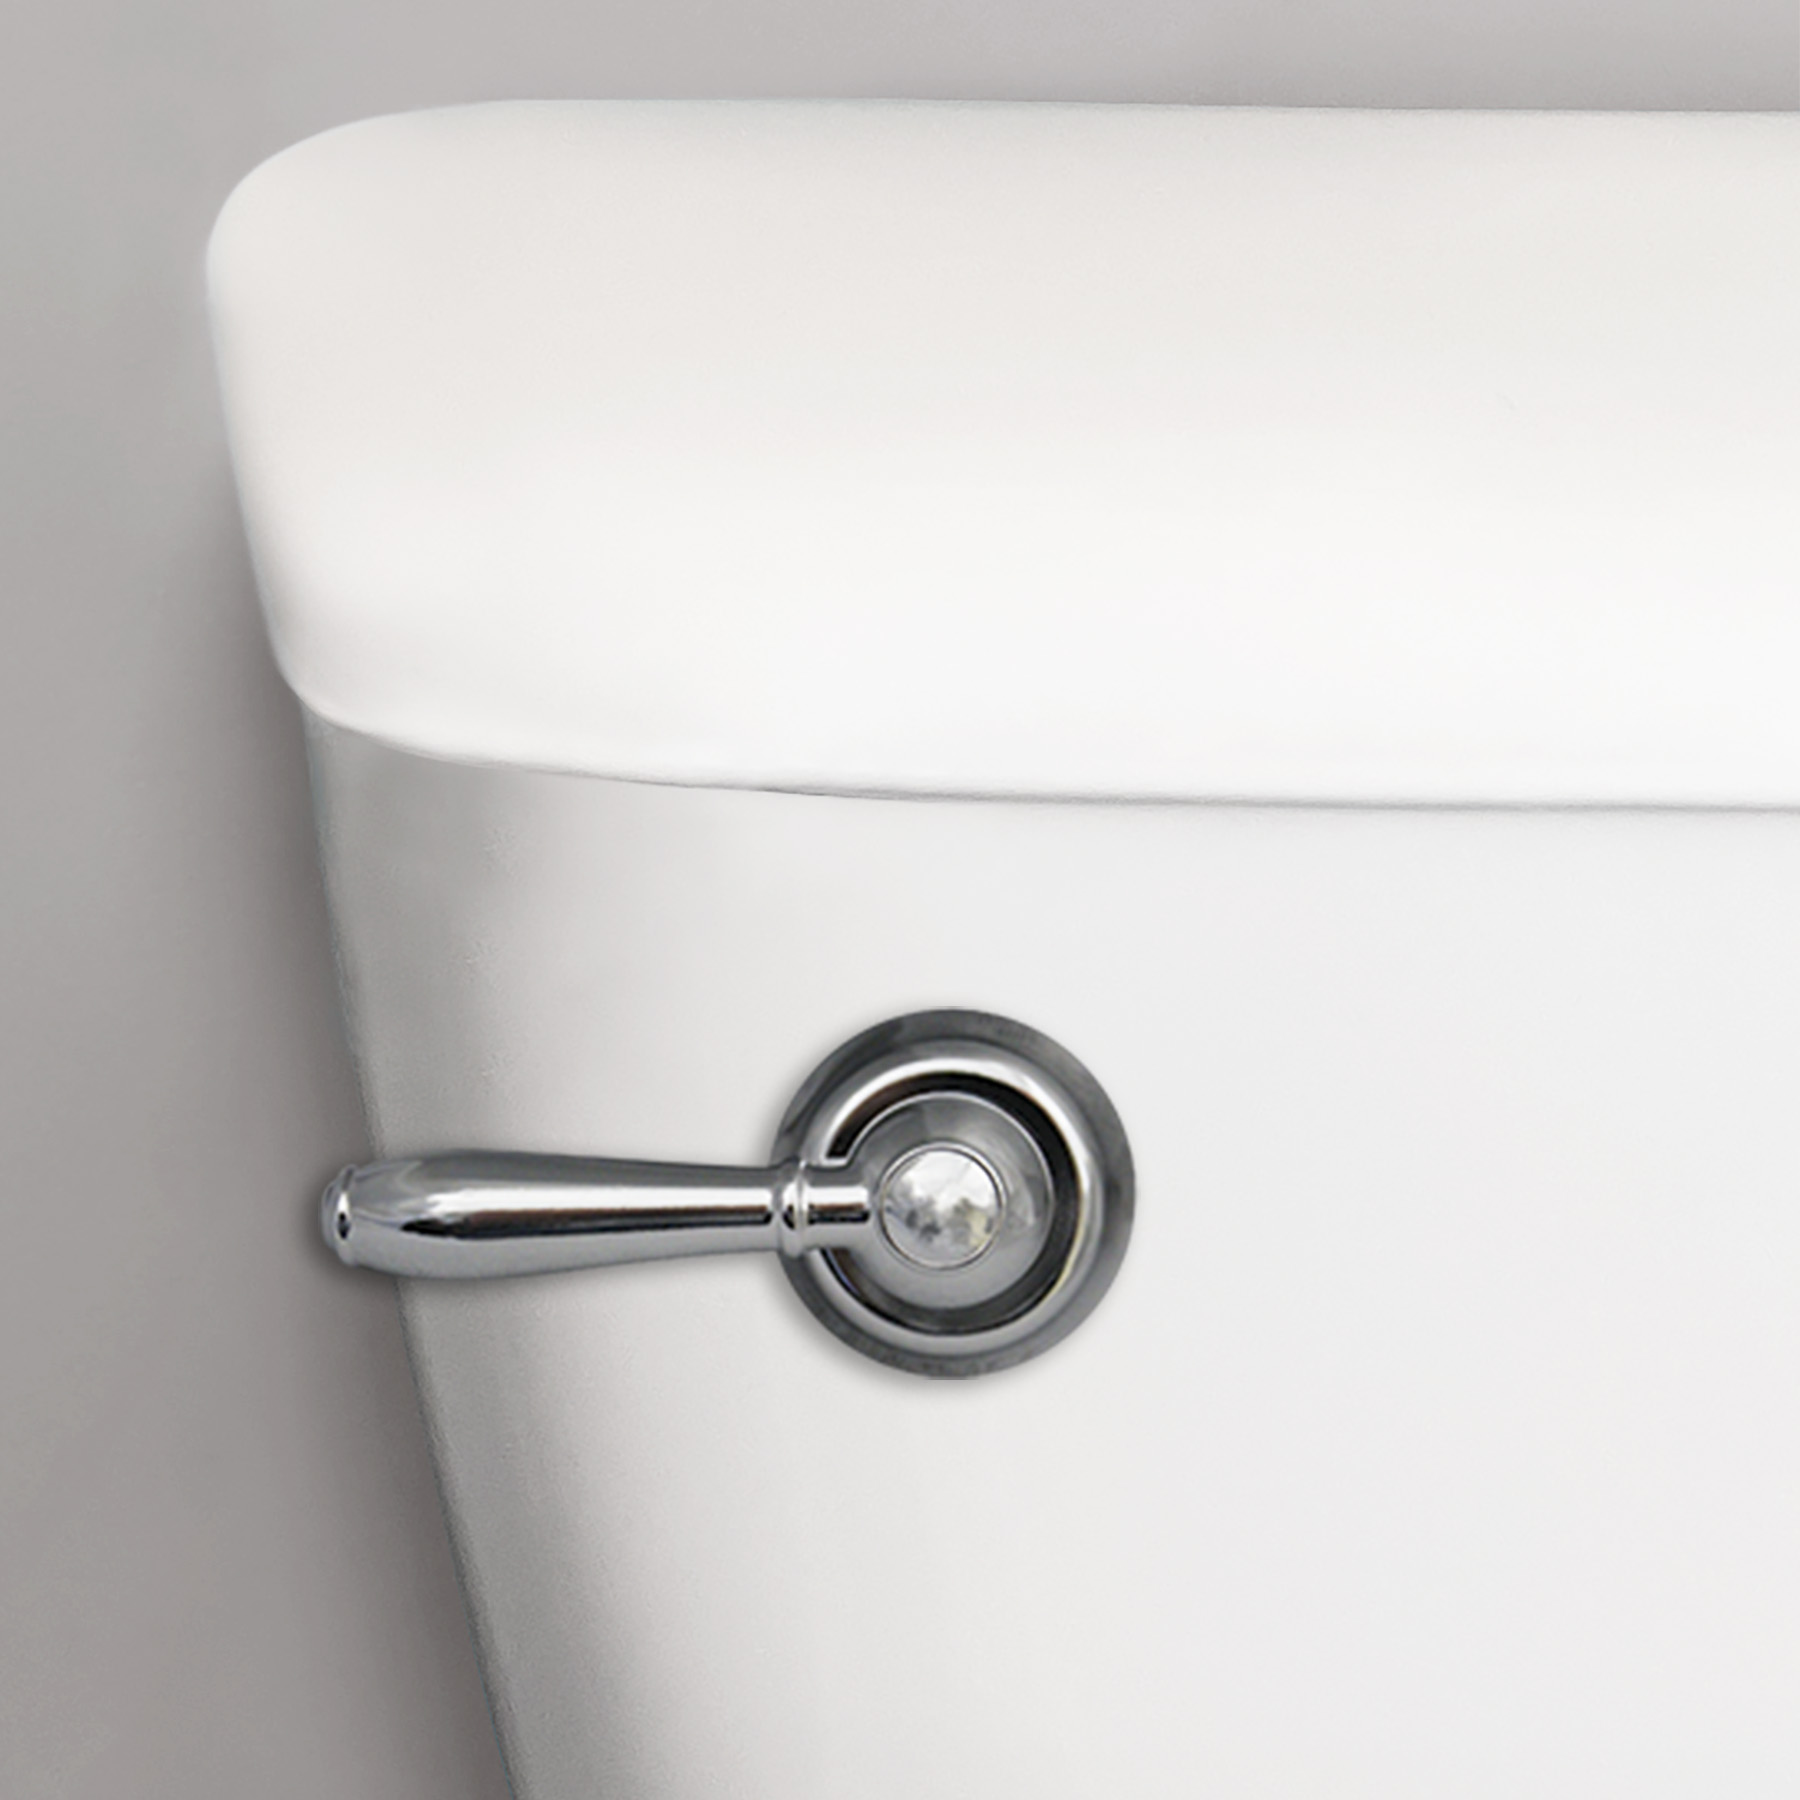 Faucet Chrome Toilet Flush handle on toile tank